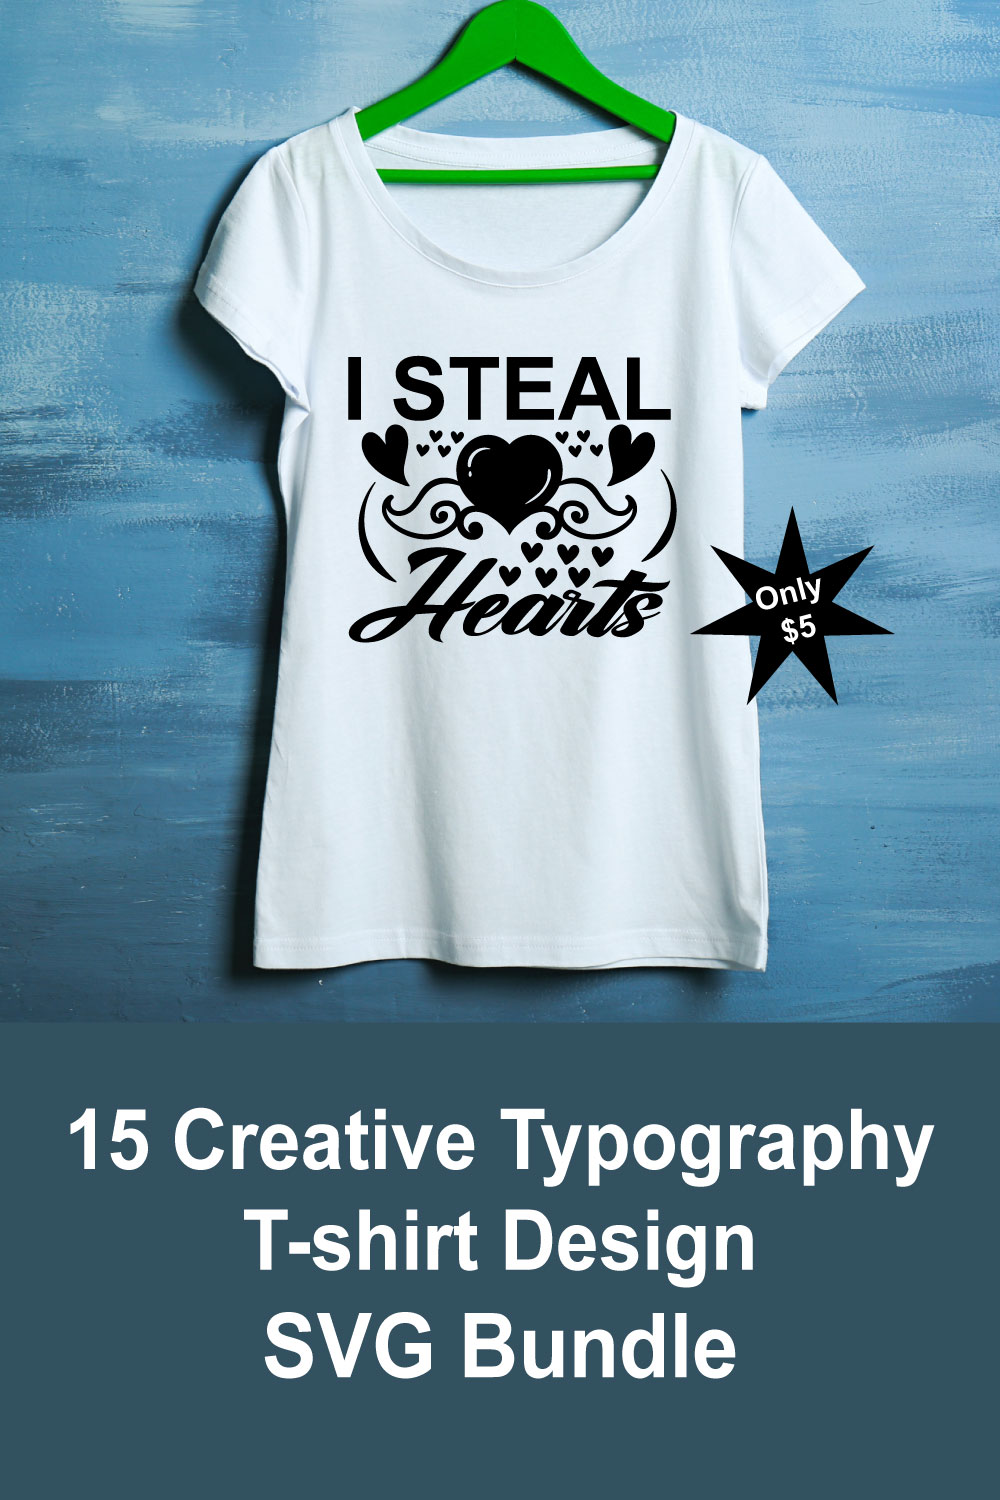 T-shirt Typography Design Quotes SVG pinterest image.